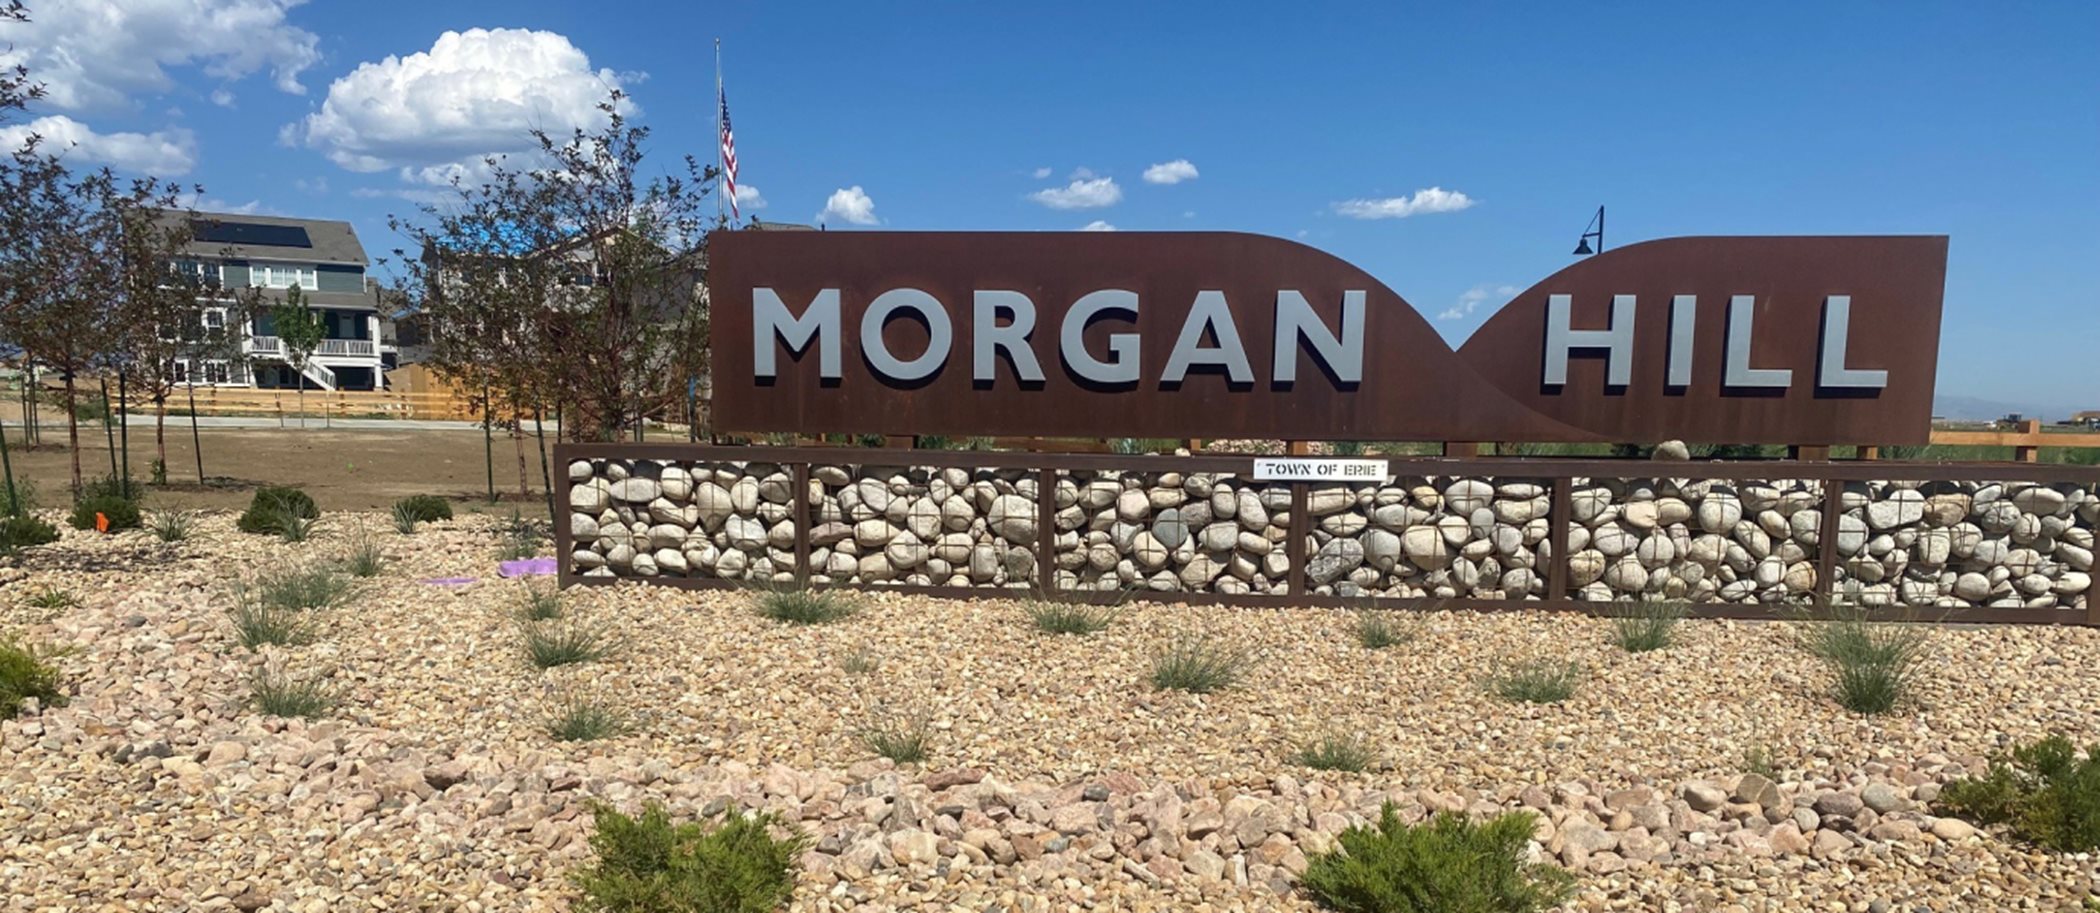 Morgan Hill monument sign